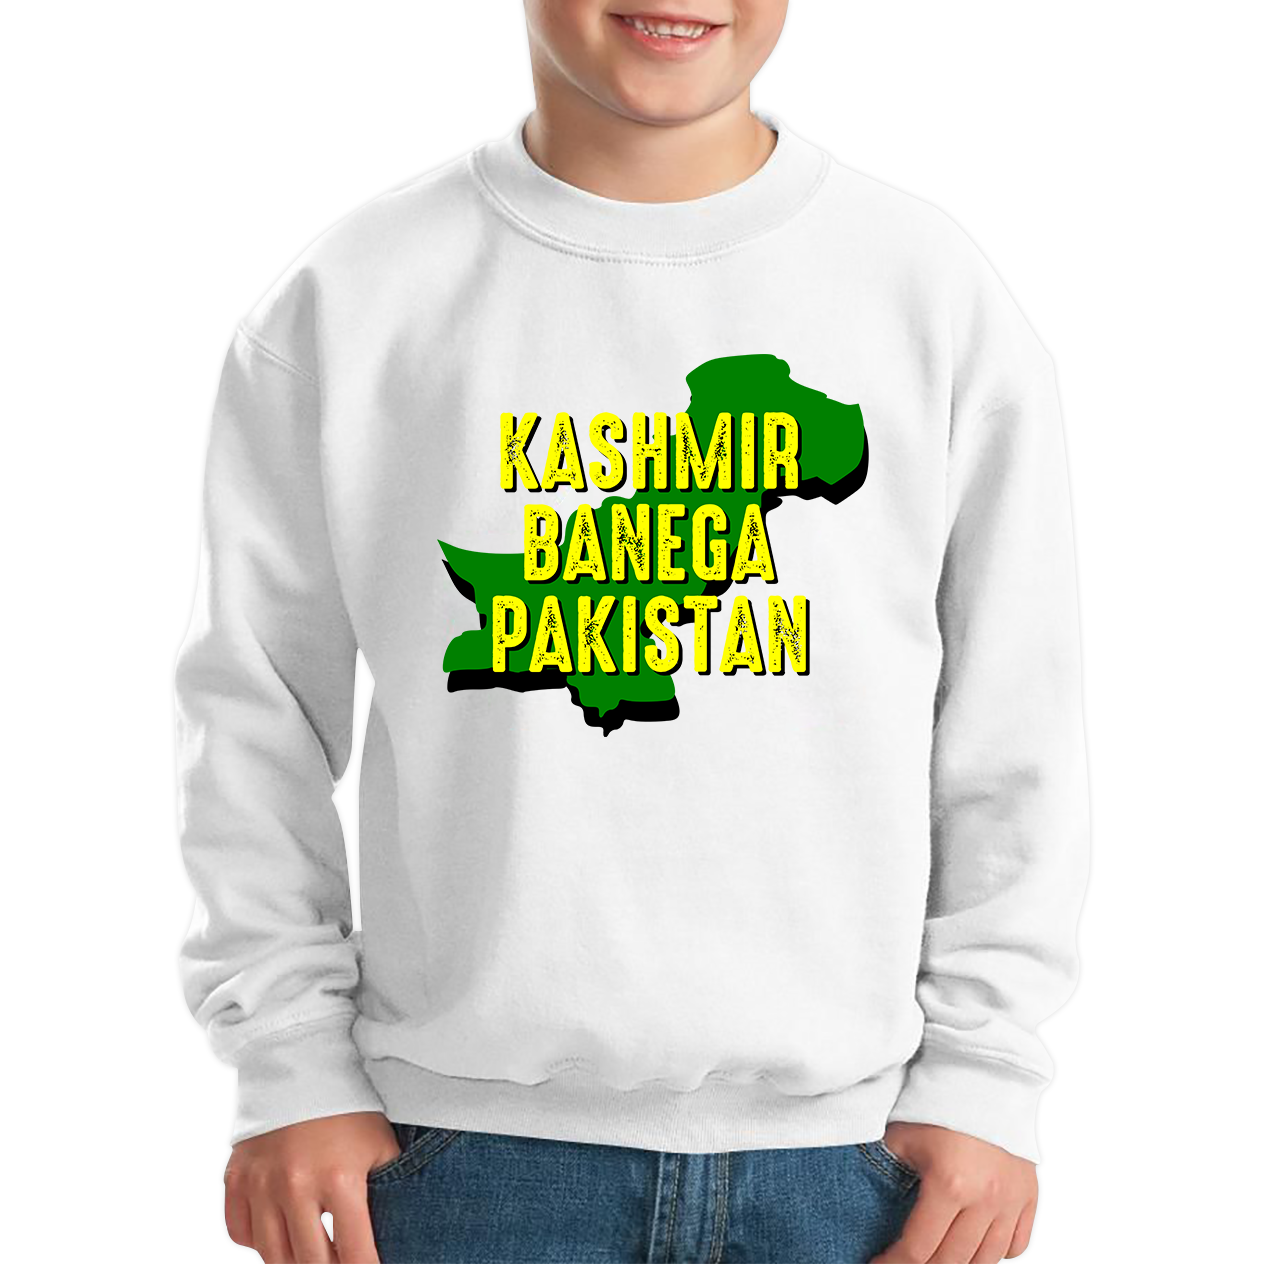 Kashmir Banega Pakistan Stand With Kashmir Pray For Kashmir And Muslims Kids Jumper